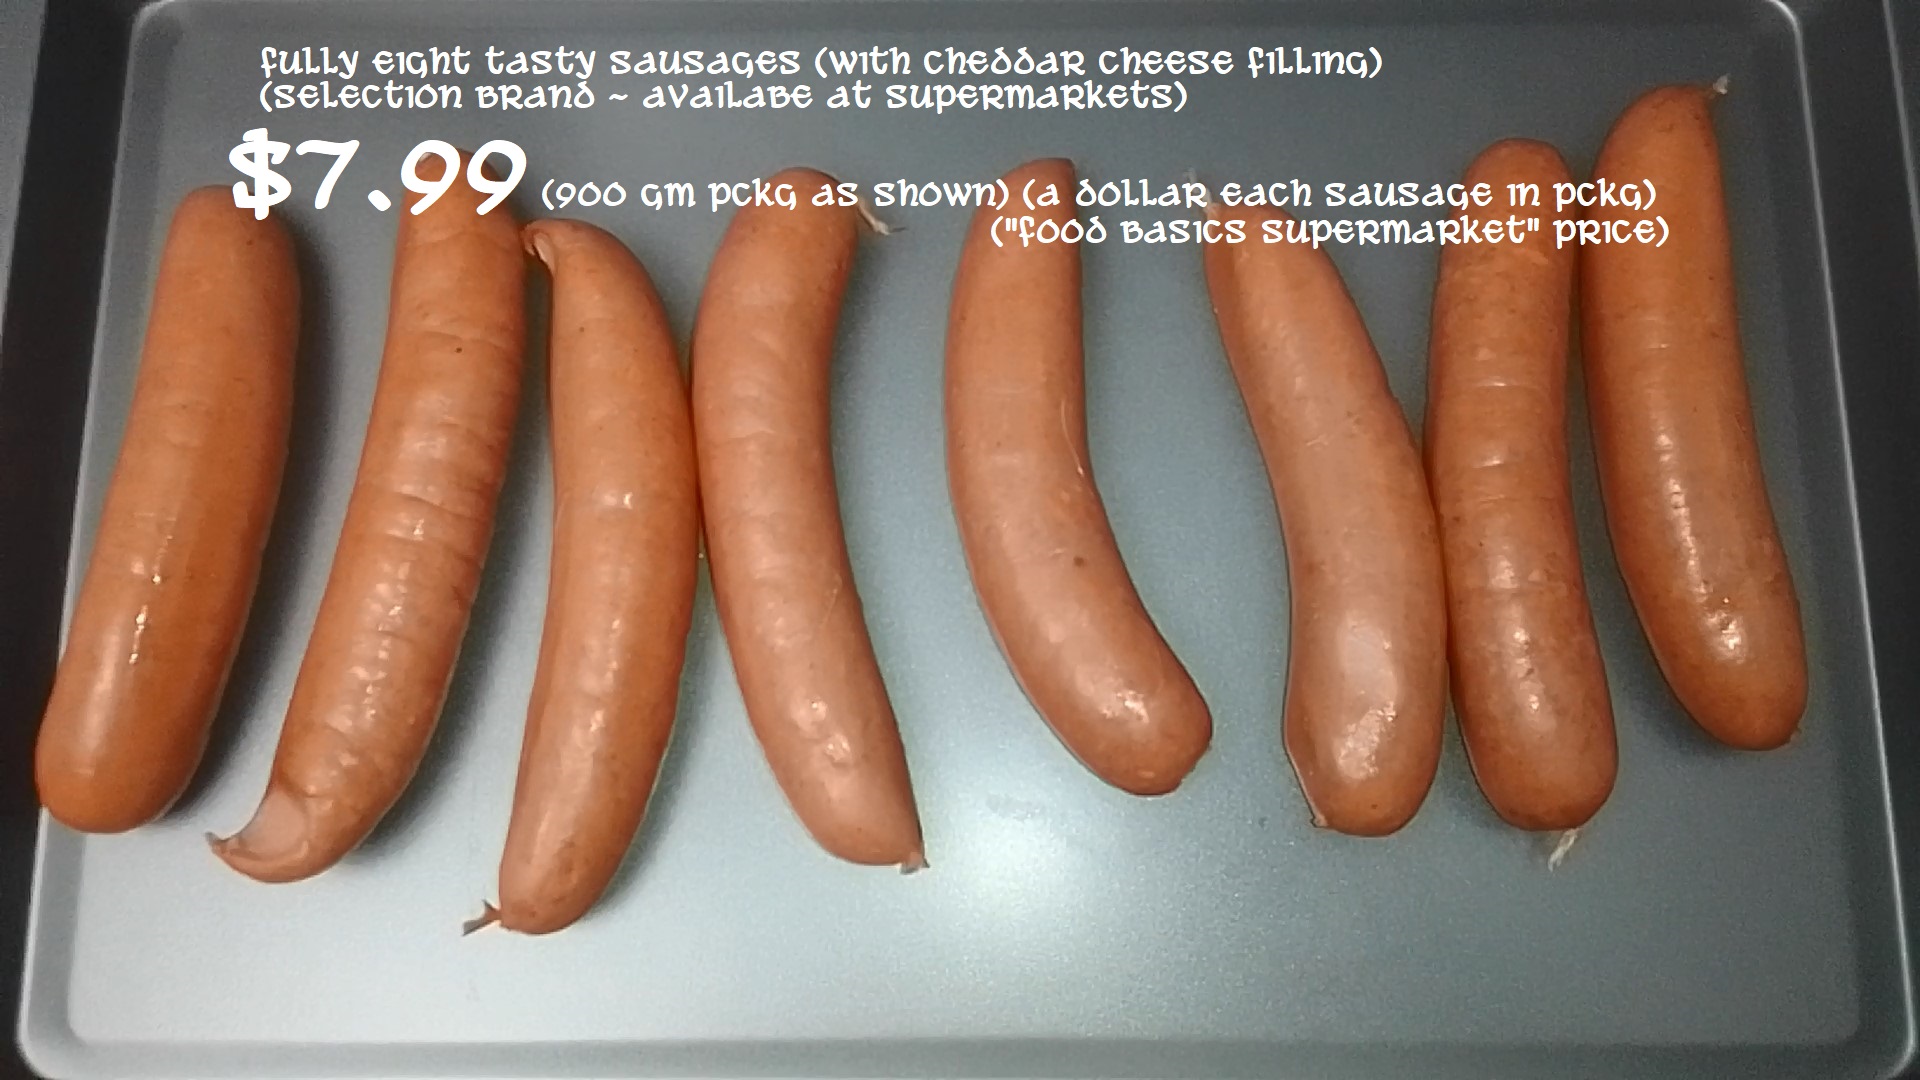 selection brand sausage pack